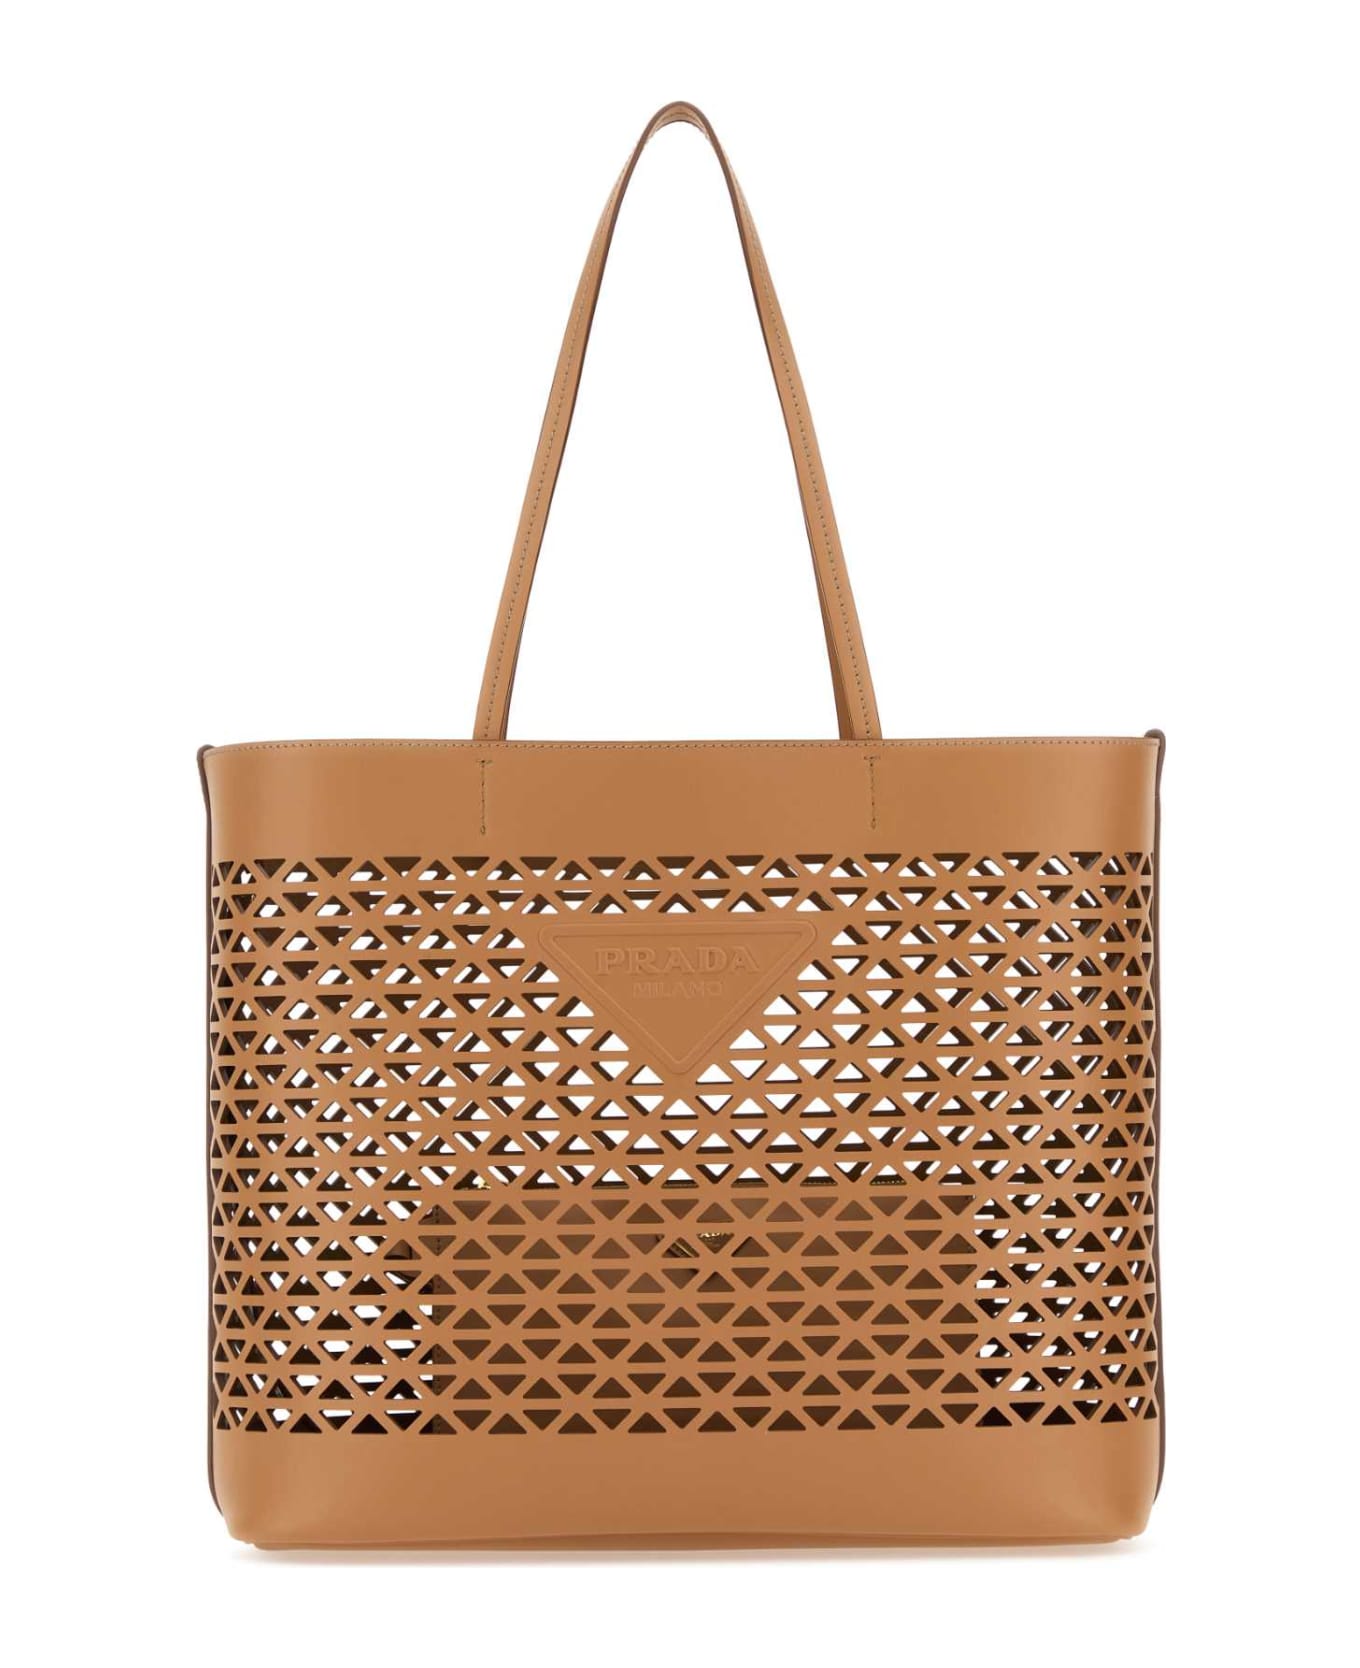 Prada Sand Leather Shopping Bag - NATURALE